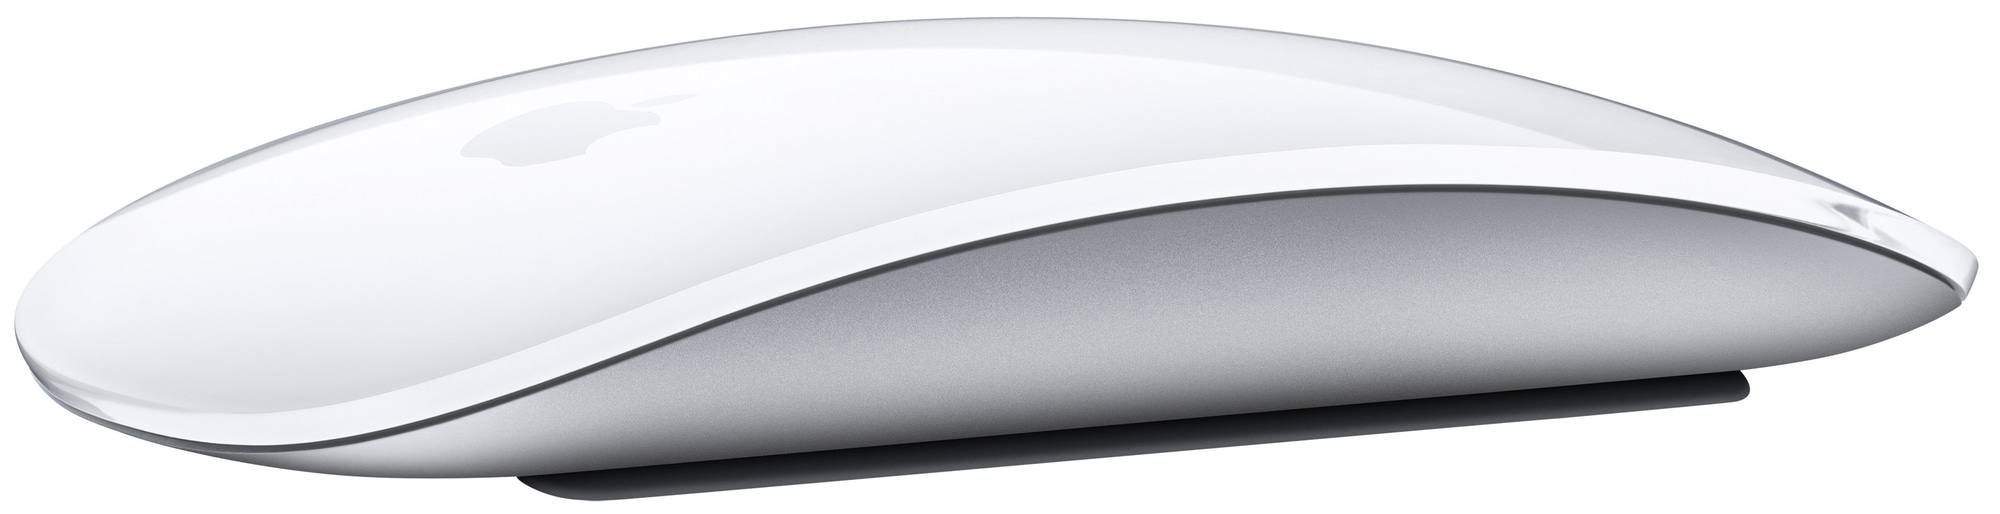 Apple Magic Mouse 2 - Mus och Tangentbord - Elgiganten